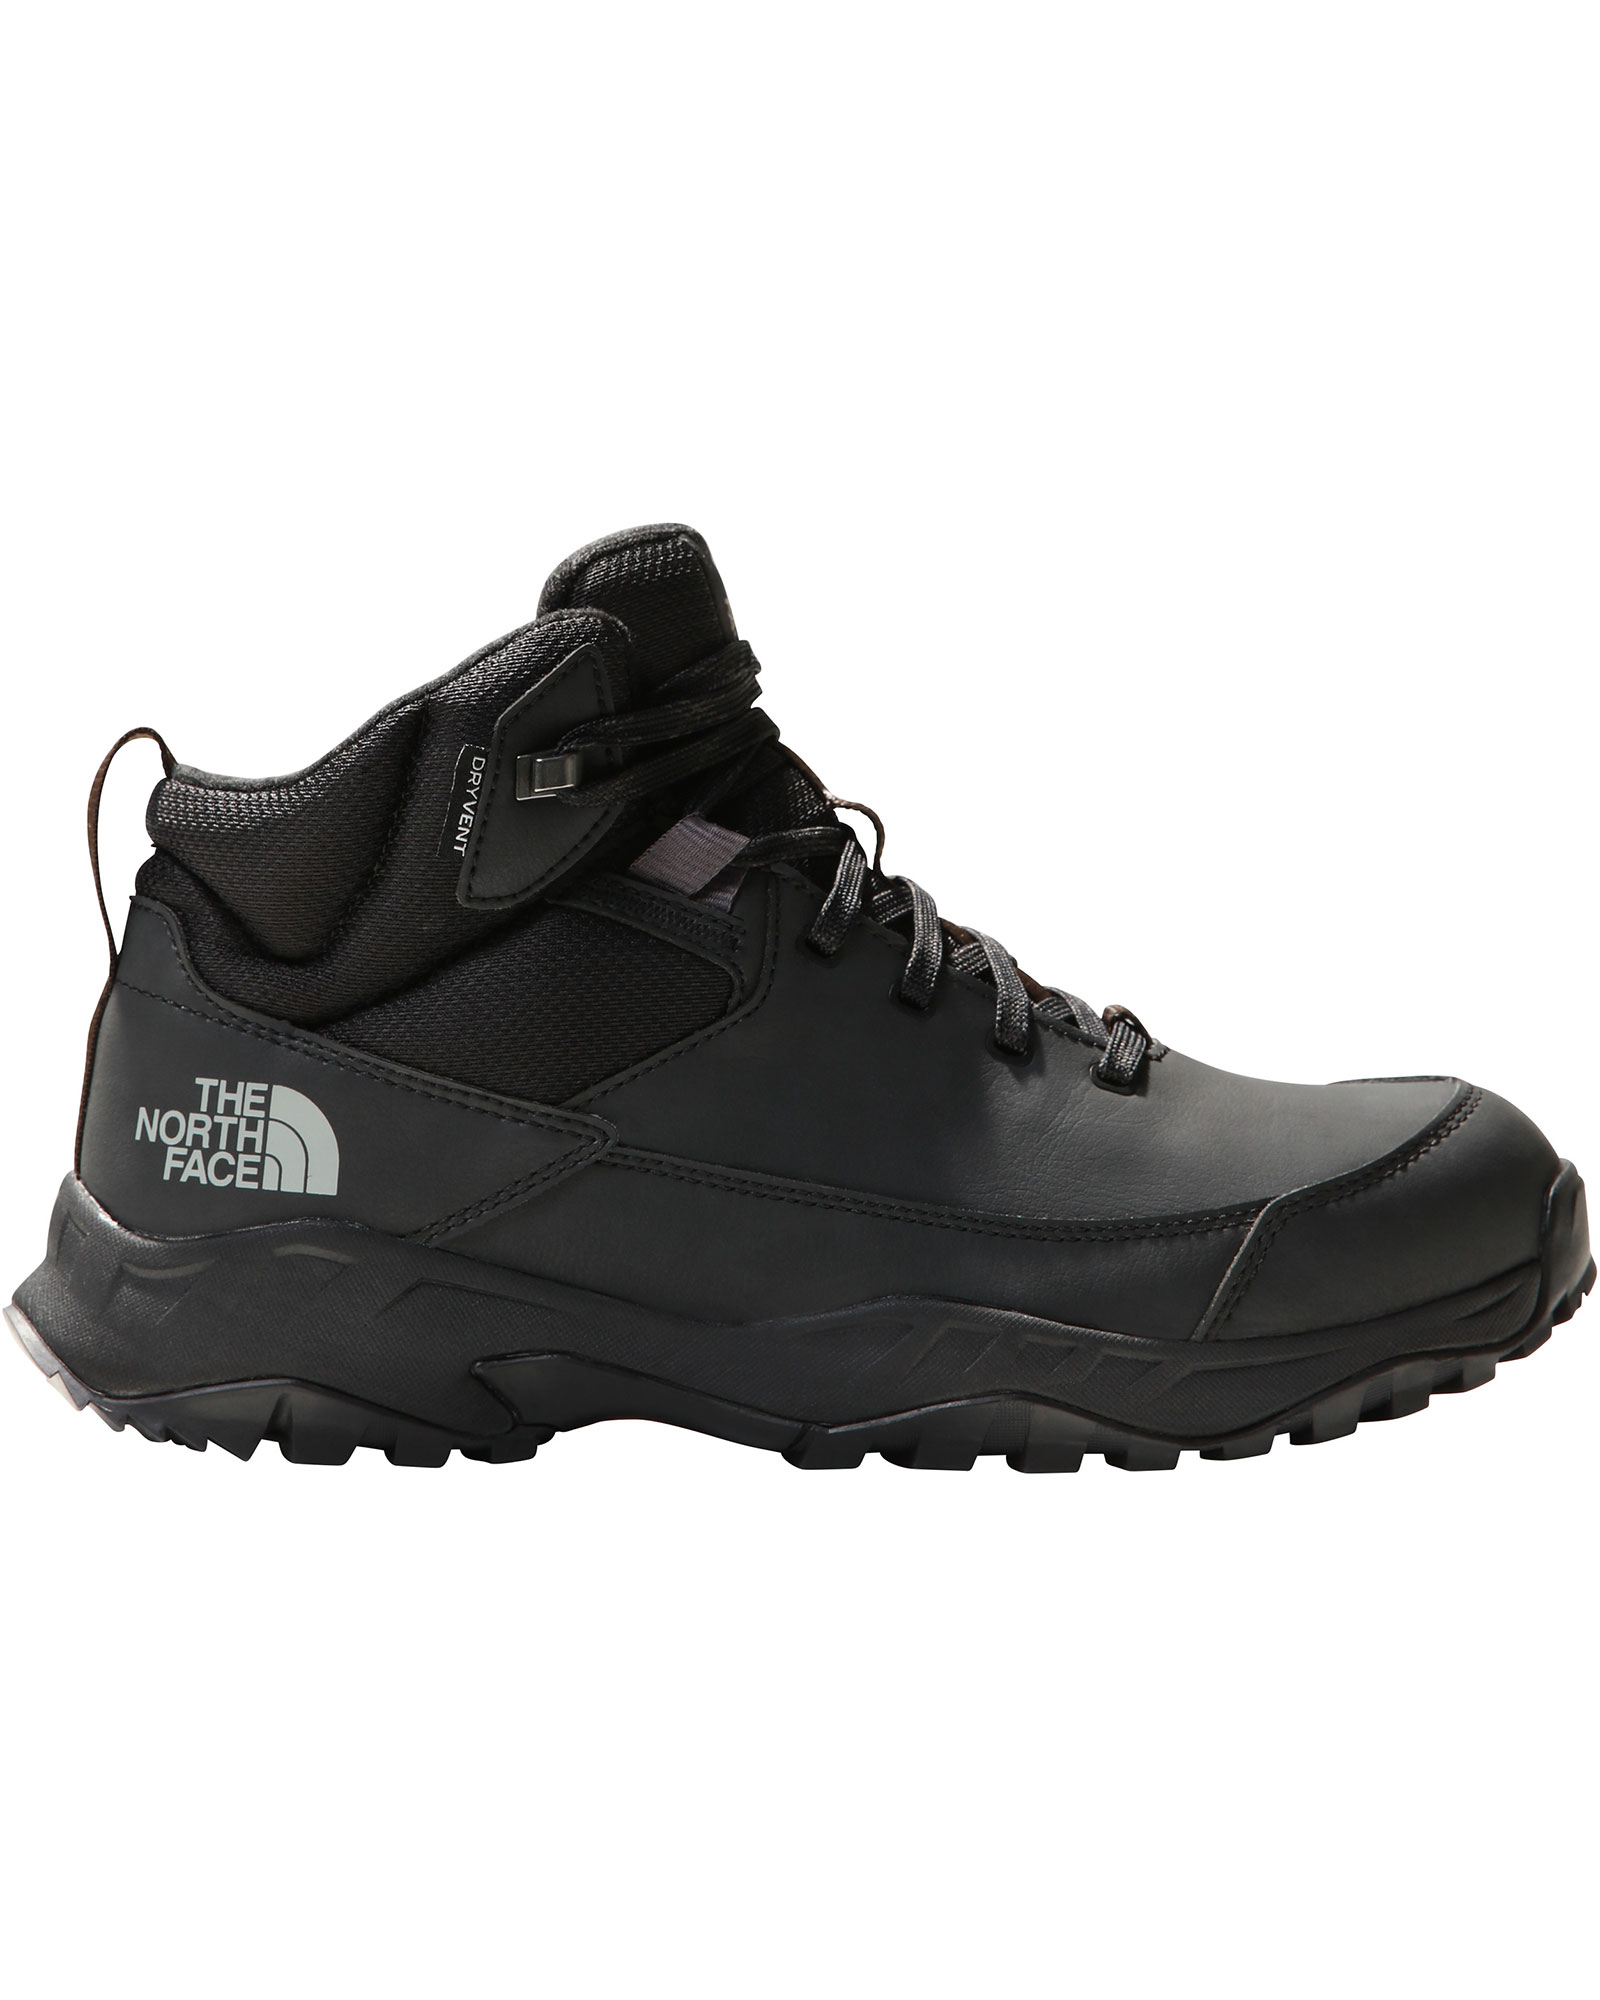 The North Face Storm Strike III Waterproof Men’s Boots - TNF Black/Asphalt Grey UK 9